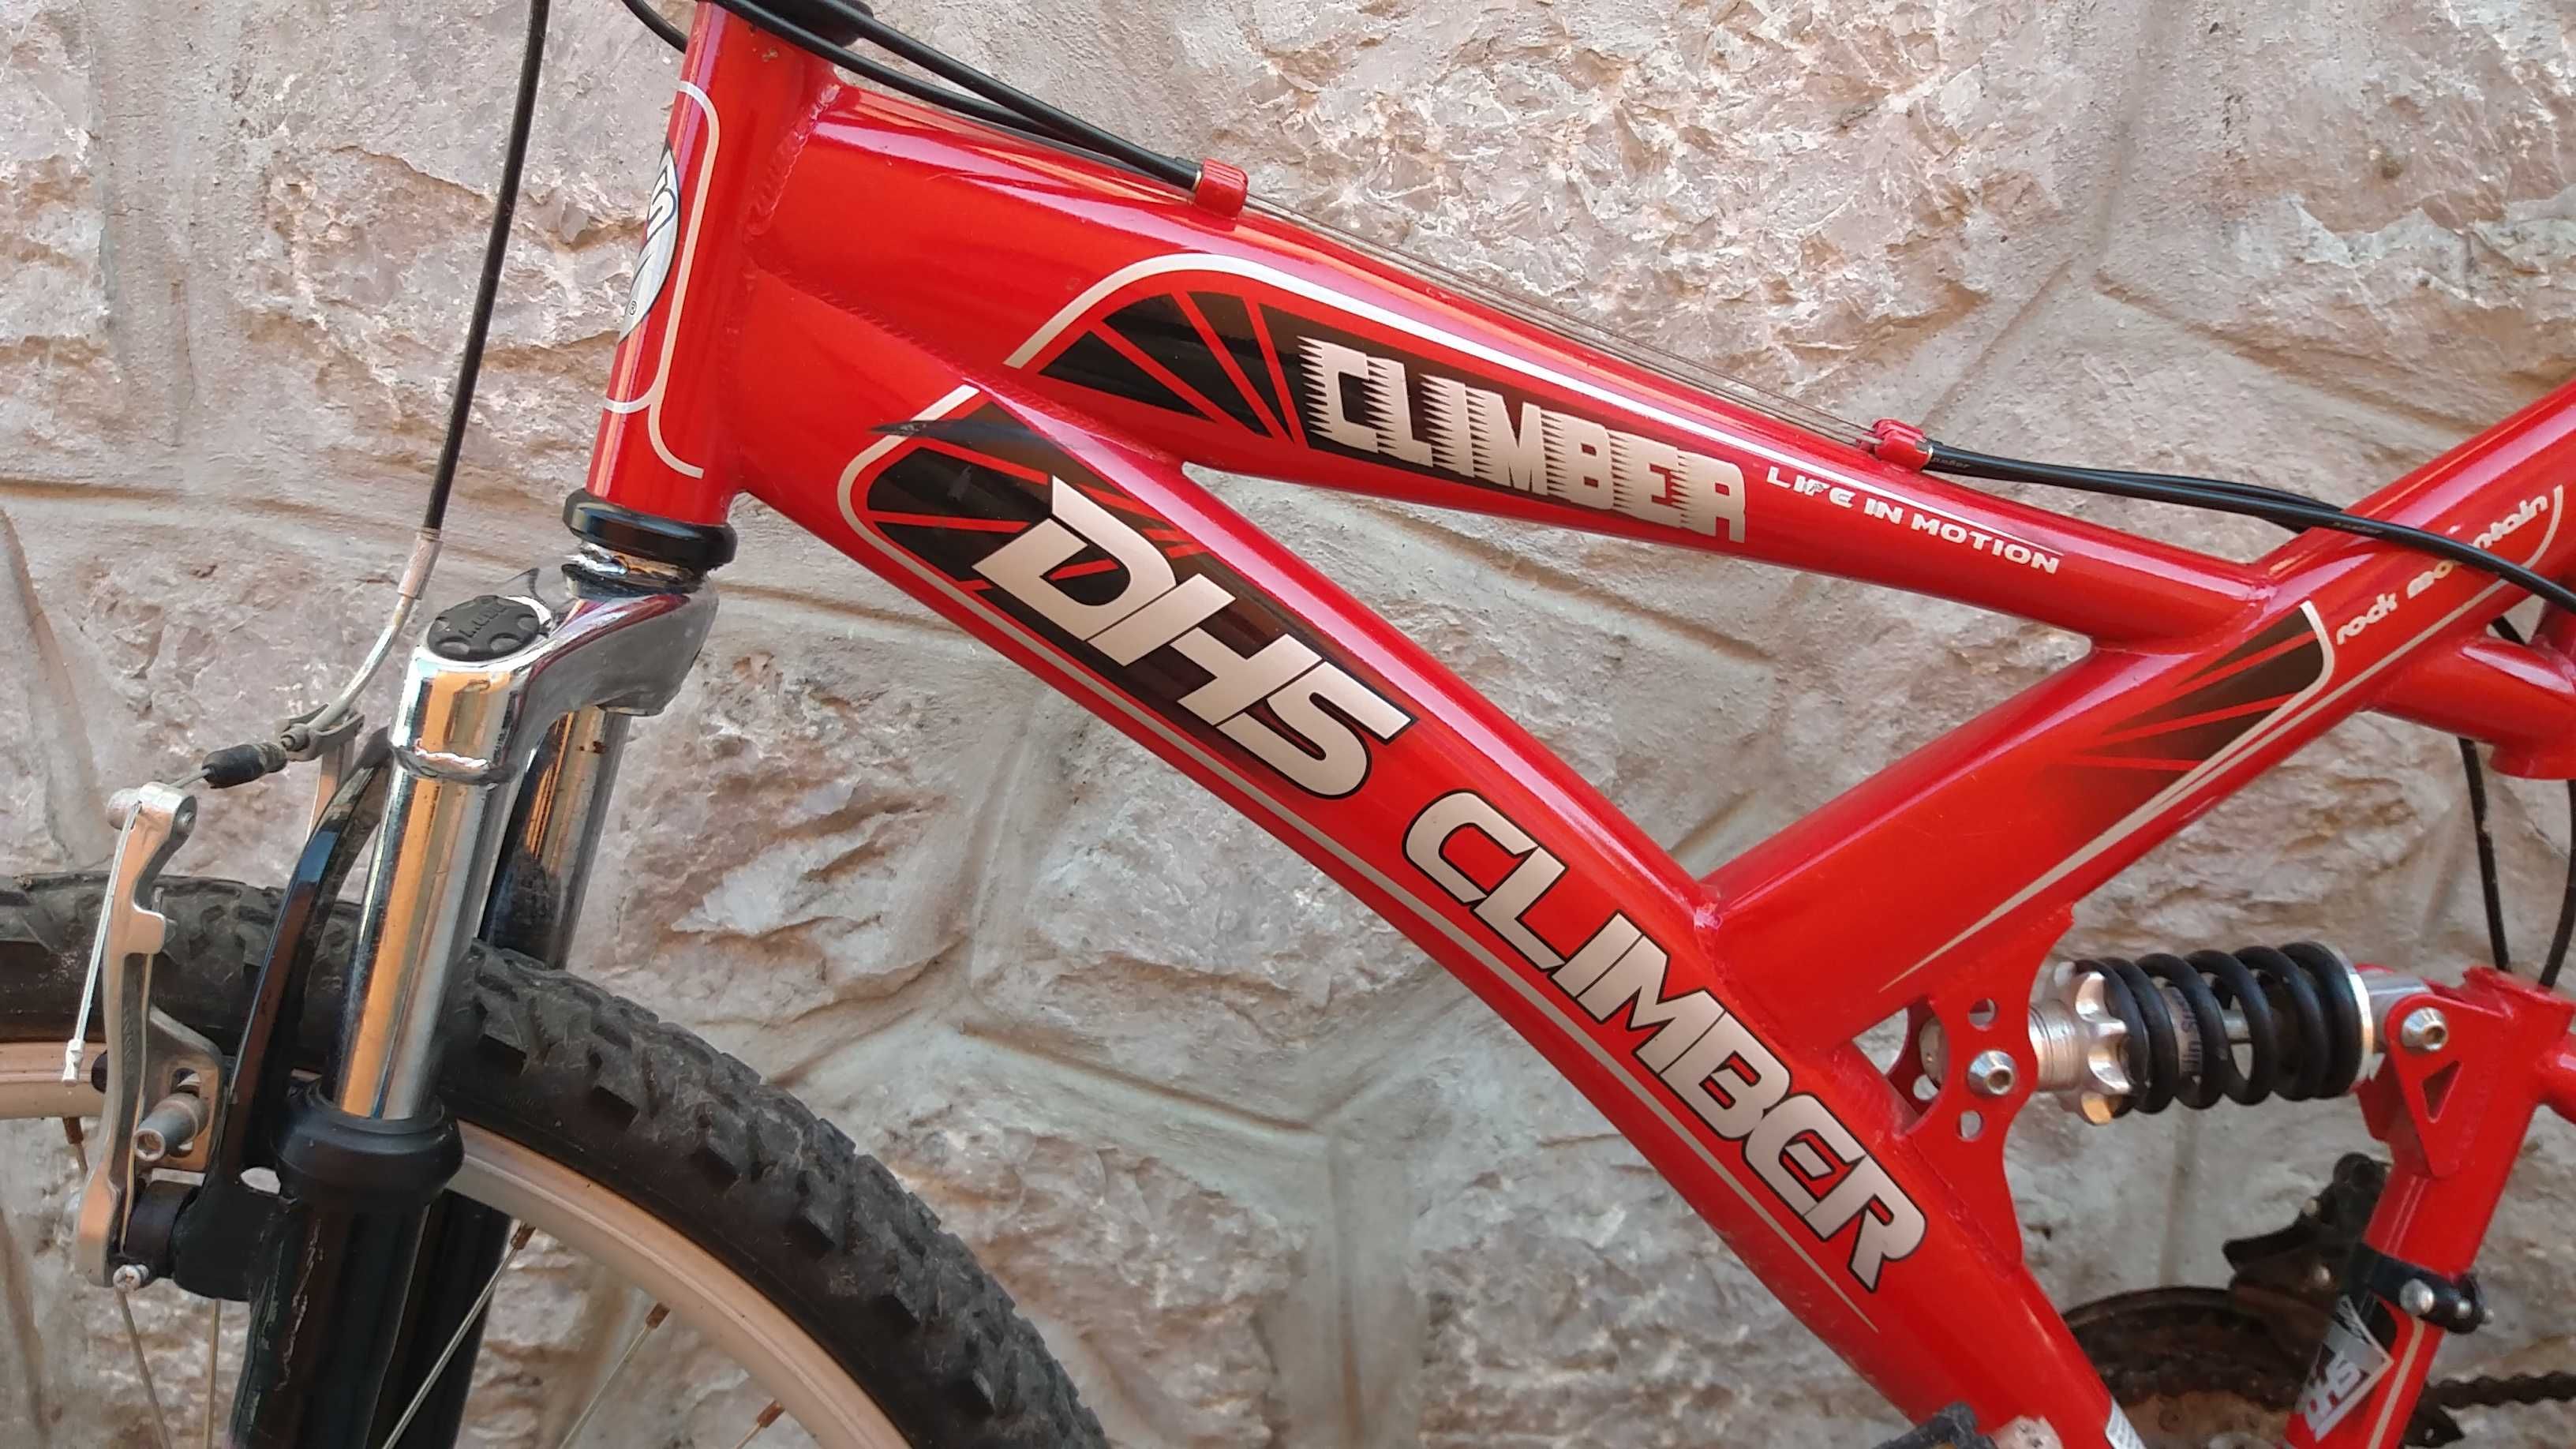 Bicicleta MTB - roti 24 - model DHS Climber- IMPECABILA !